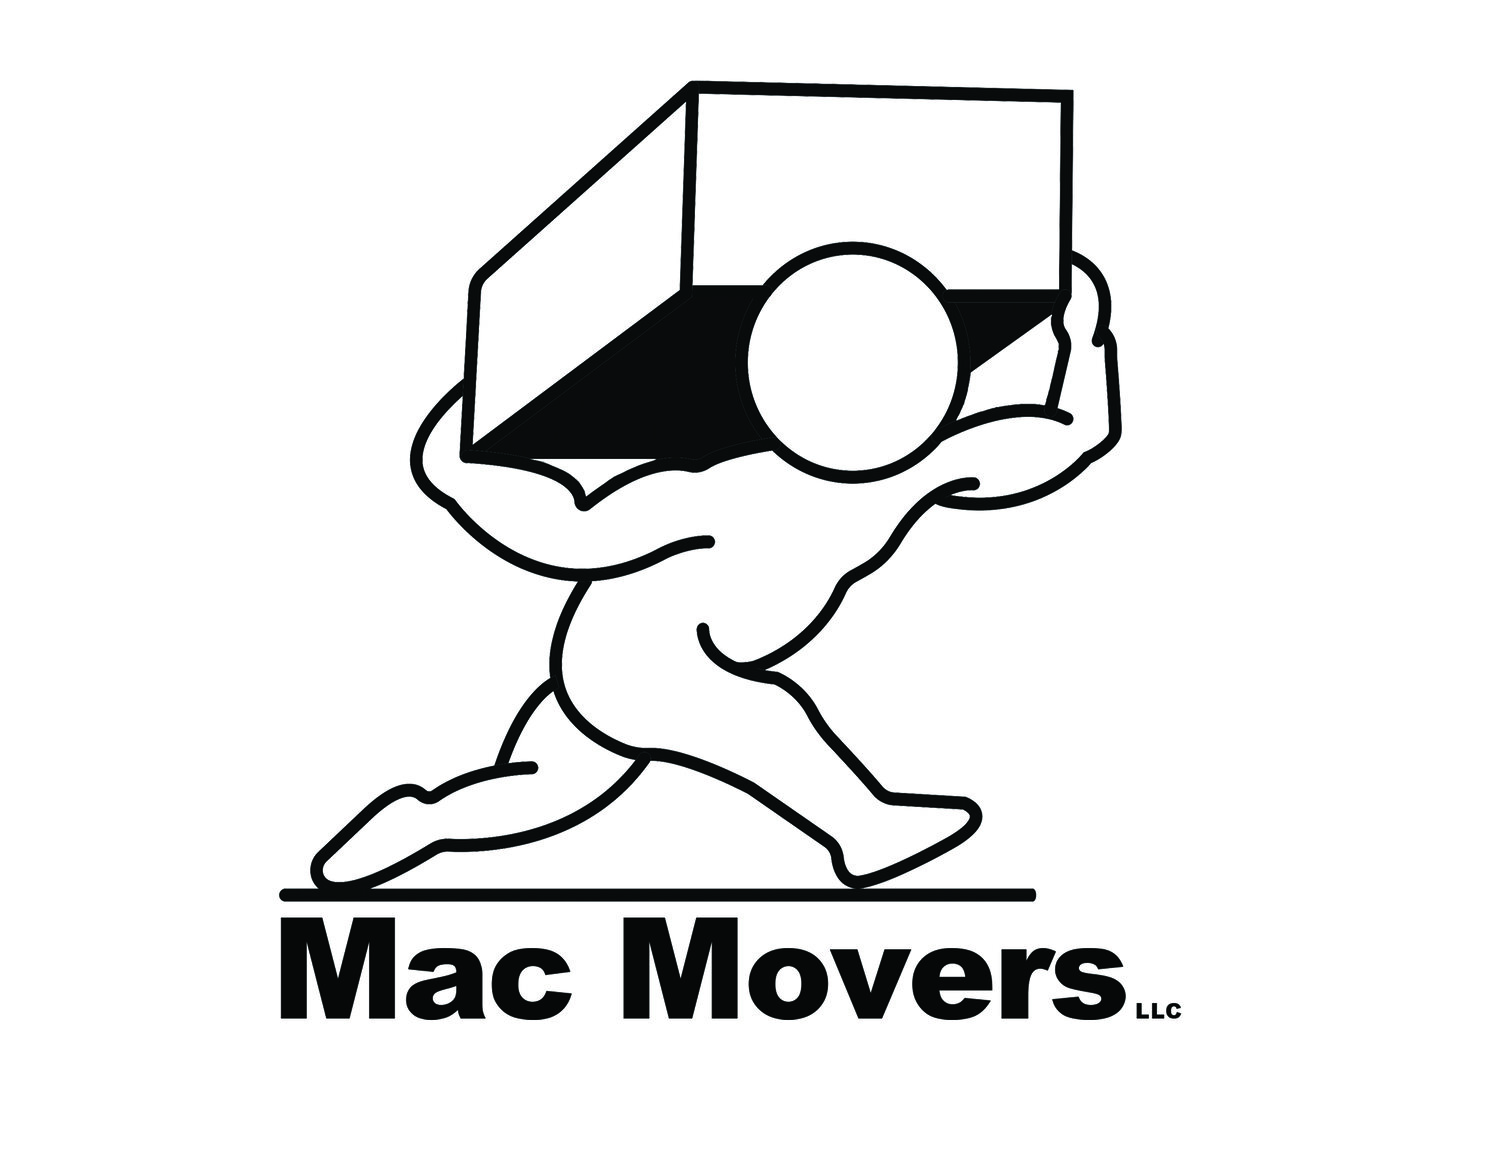 MAC MOVERS